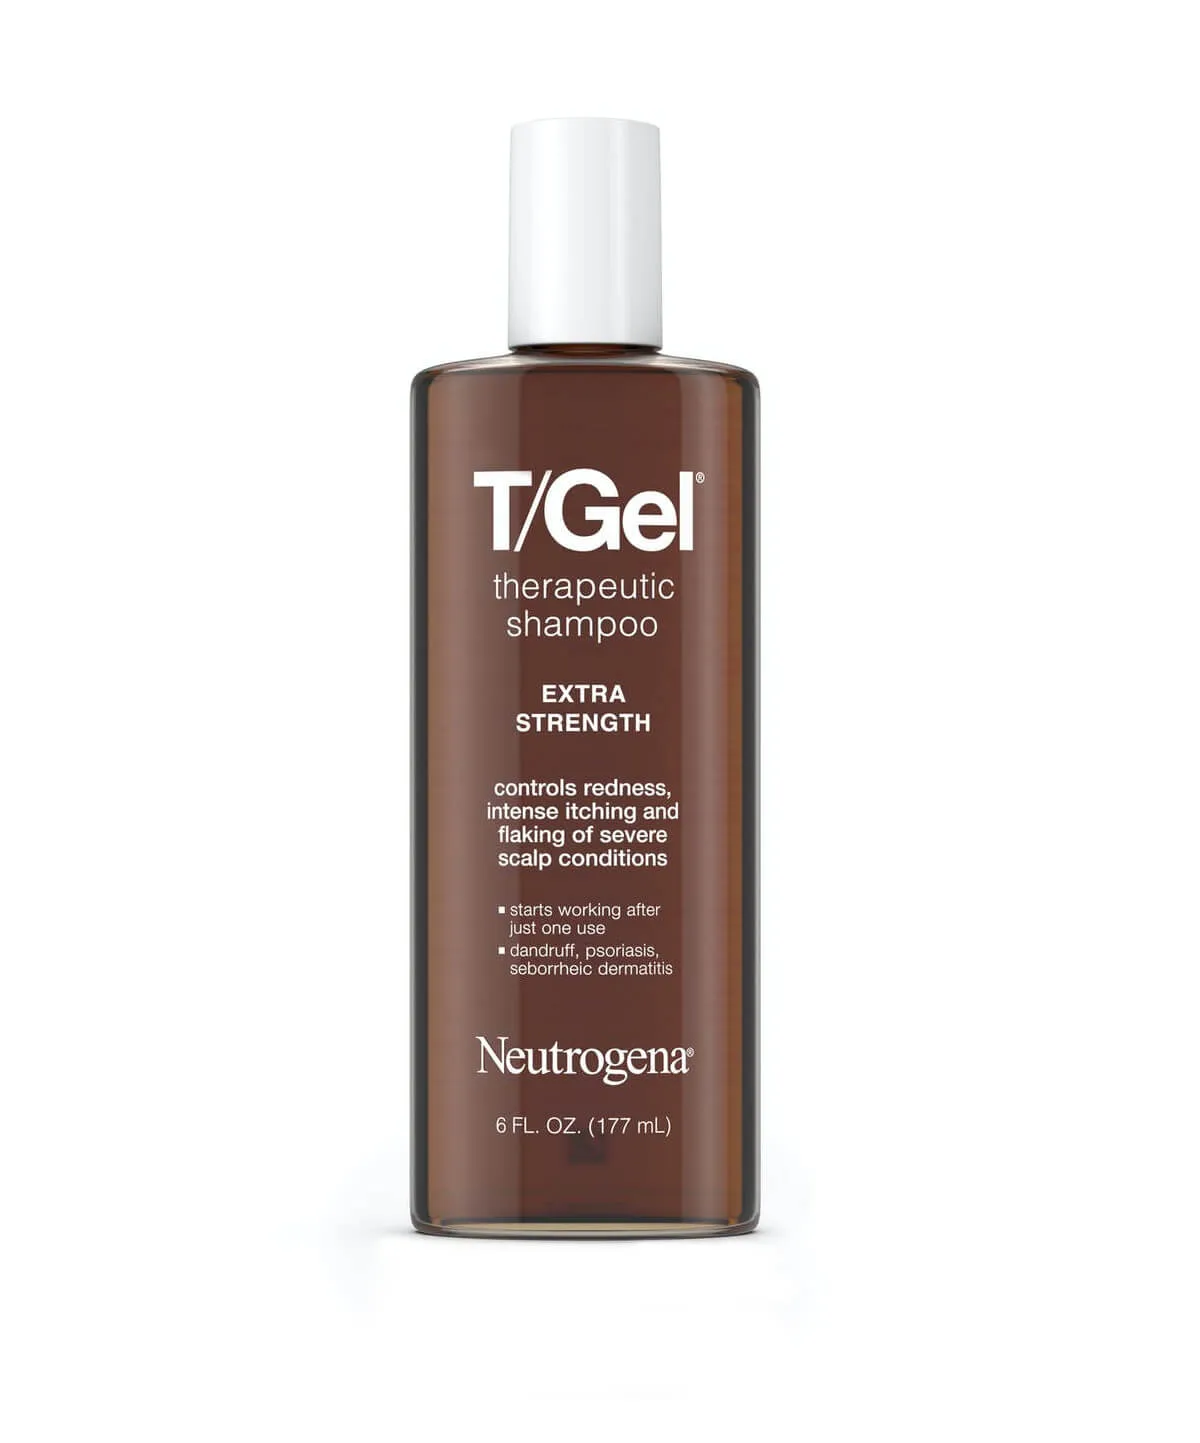 FEMMENORDIC's choice in the Tsal vs Tgel comparison, the Neutrogena T/Gel Therapeutic Shampoo